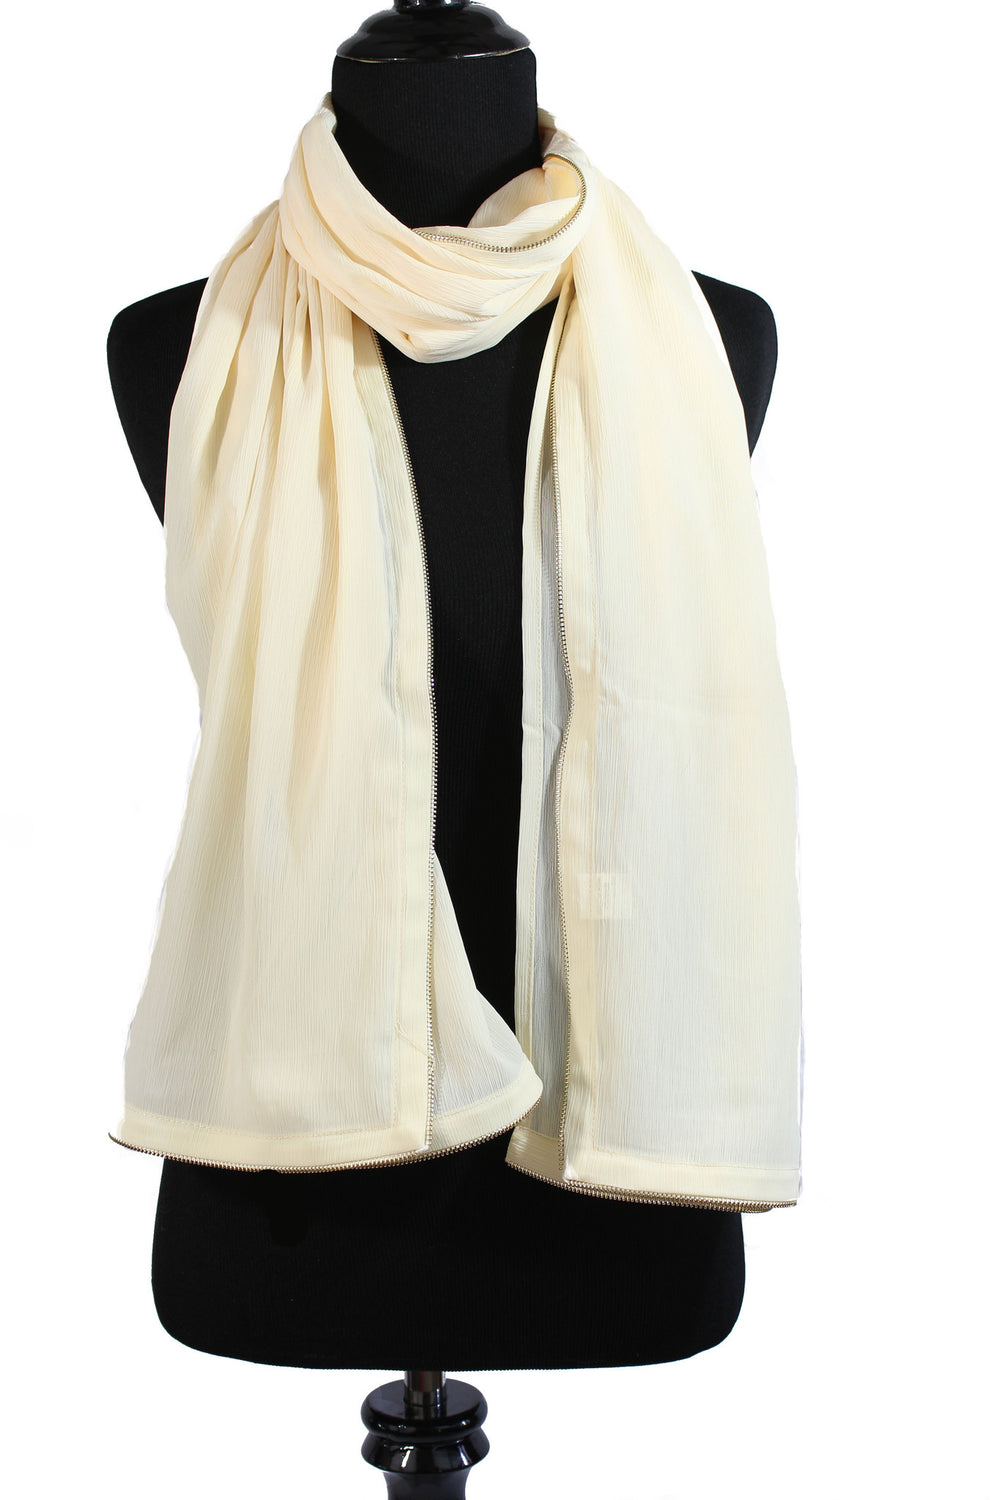 creme off white chiffon hijab with zipper embellishment along the edges